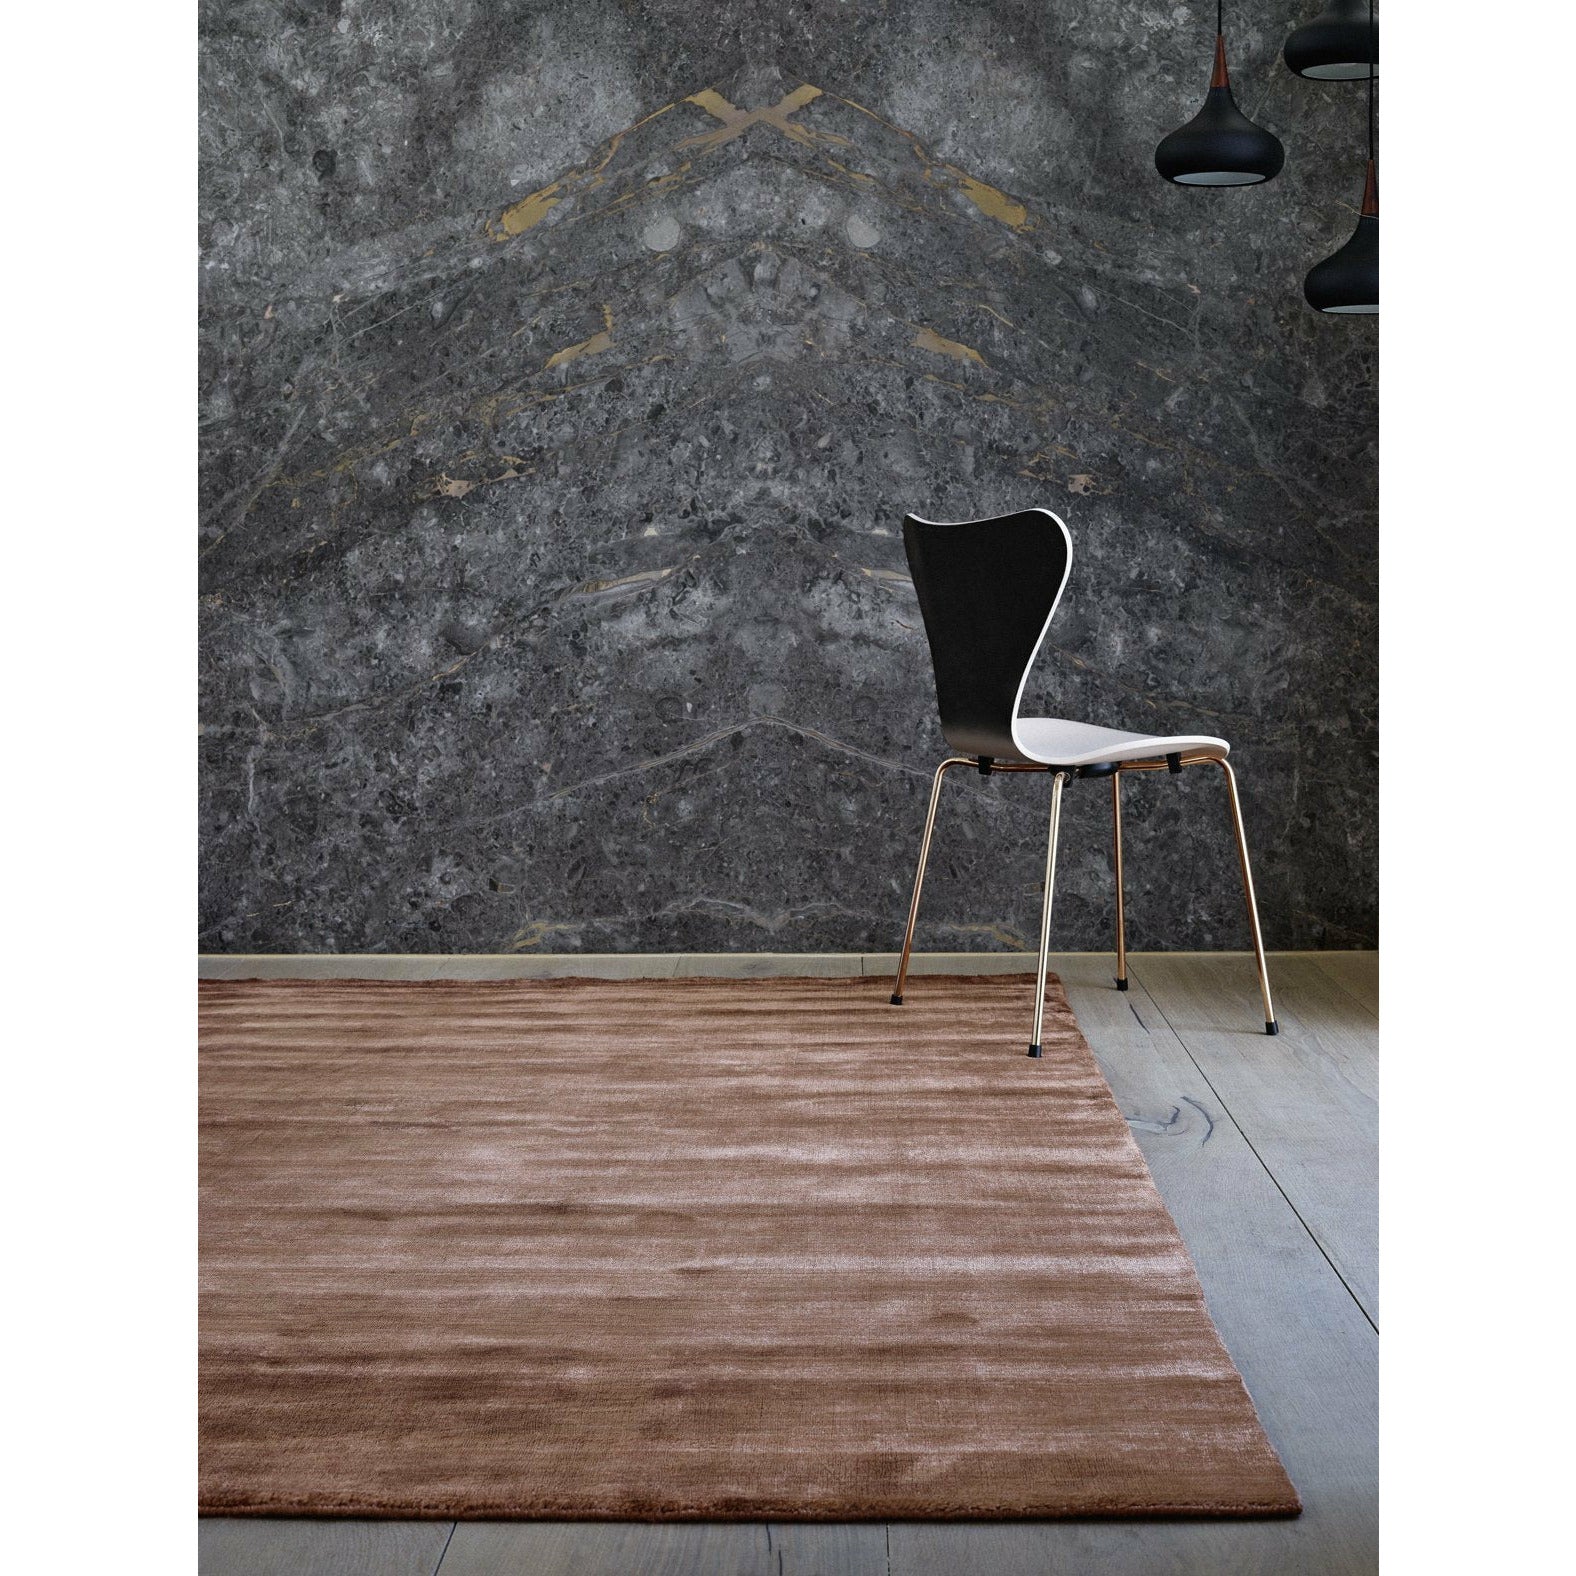 Massimo Bamboo tapis cuivre, 170x240 cm